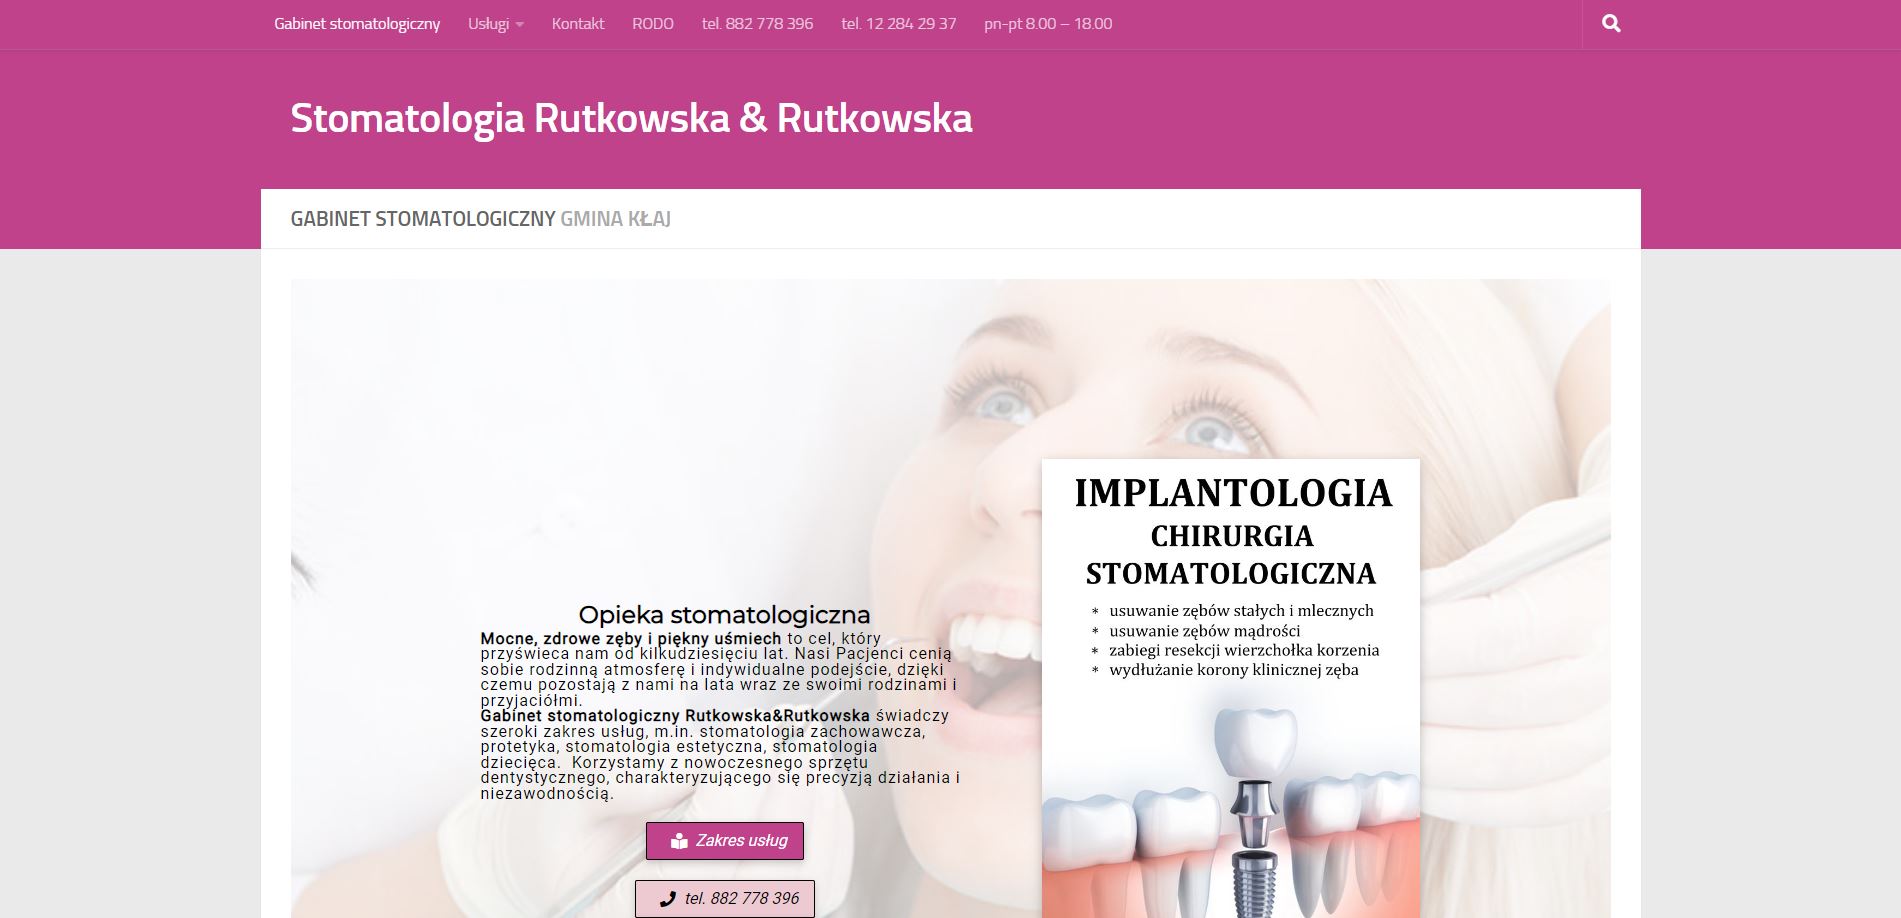 Stomatologia Rutkowska & Rutkowska